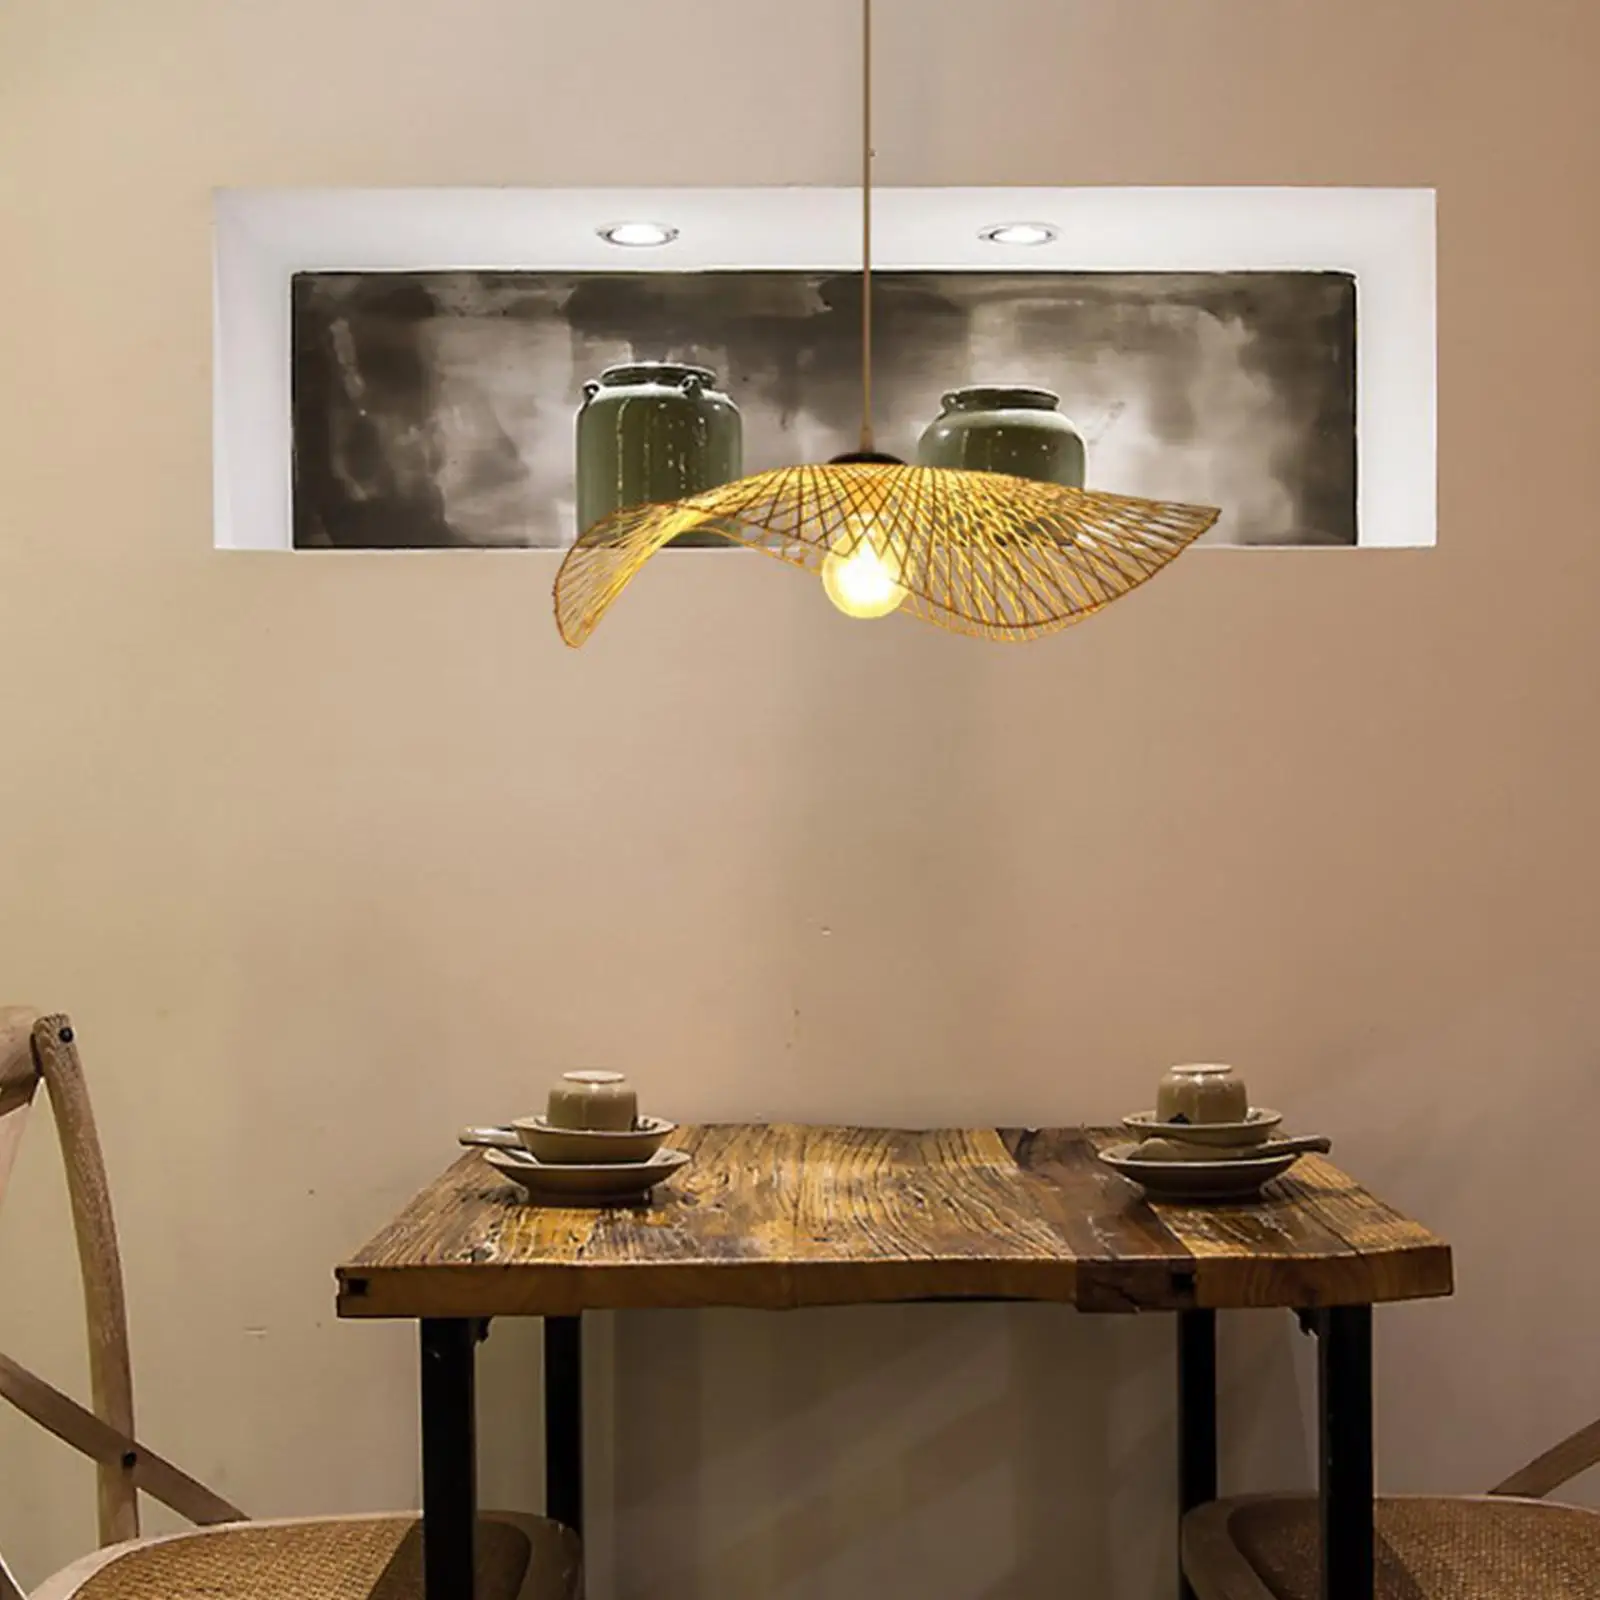 Bamboo Wicker Chandelier Lamp Fixtures Ceiling Pendant Light for Restaurant